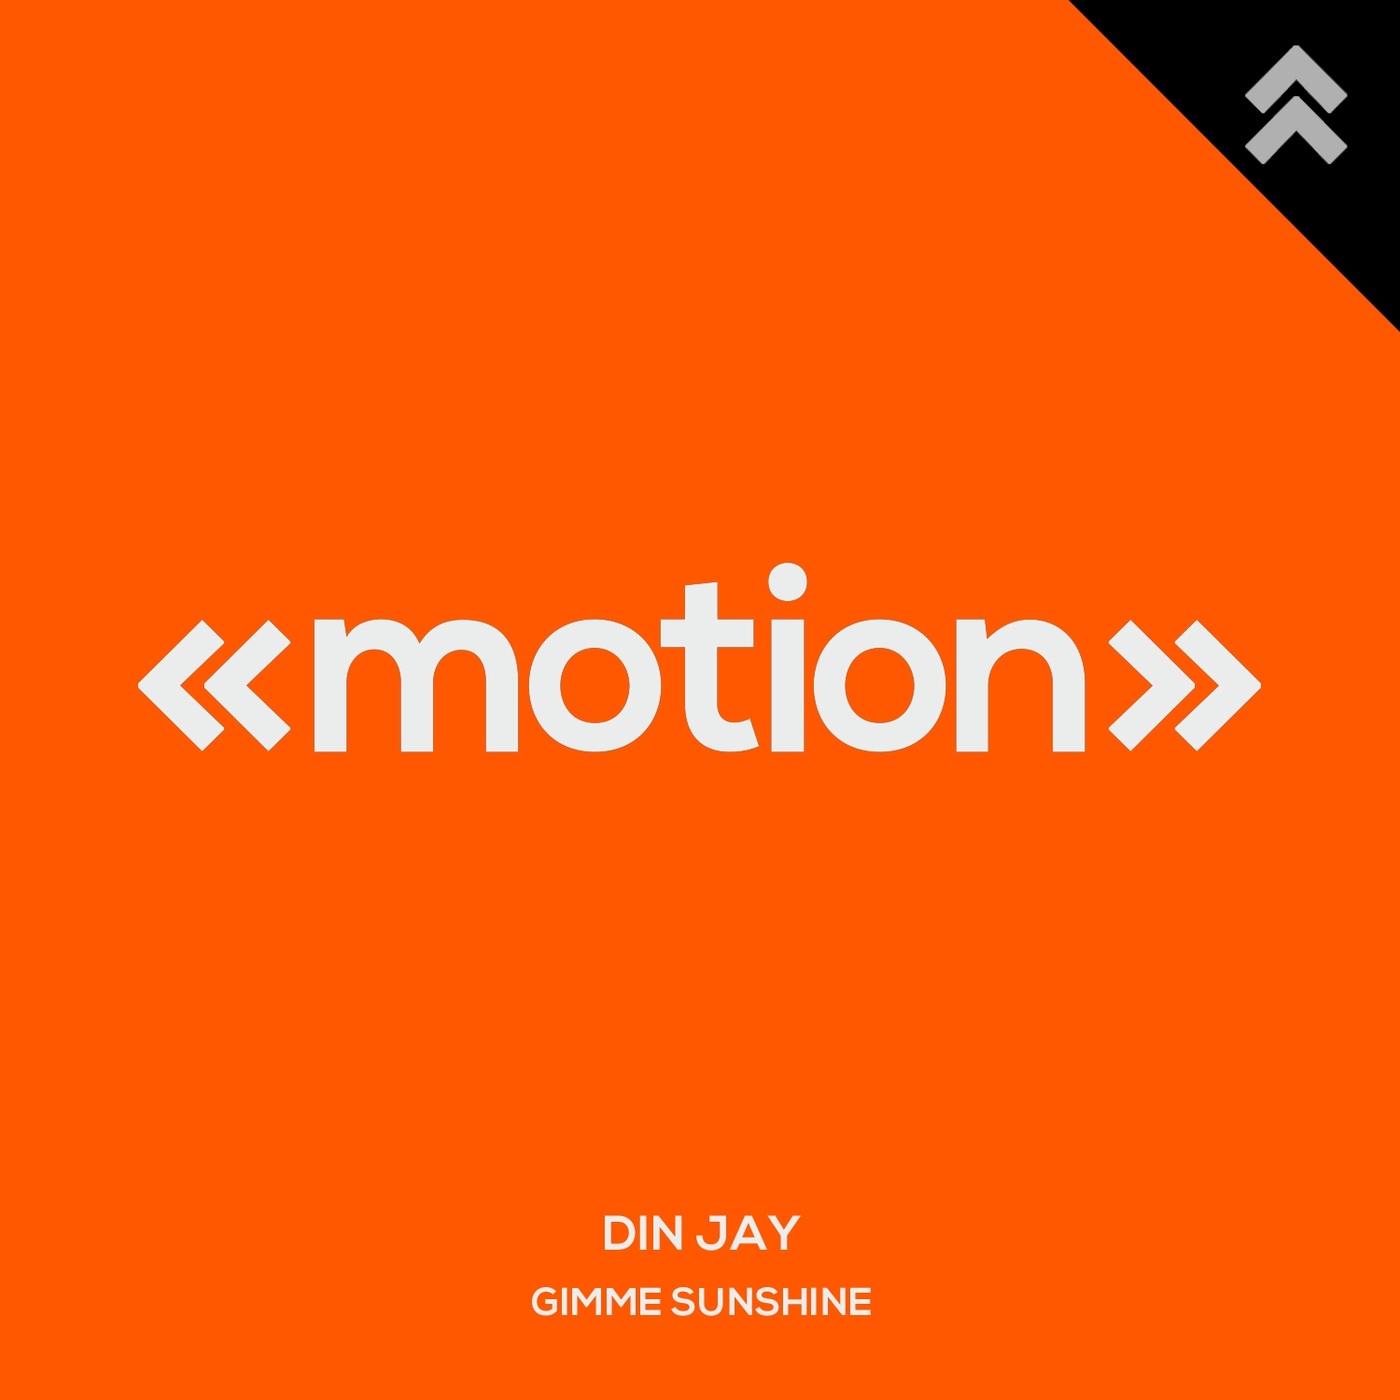 Din Jay - Gimme Sunshine / motion